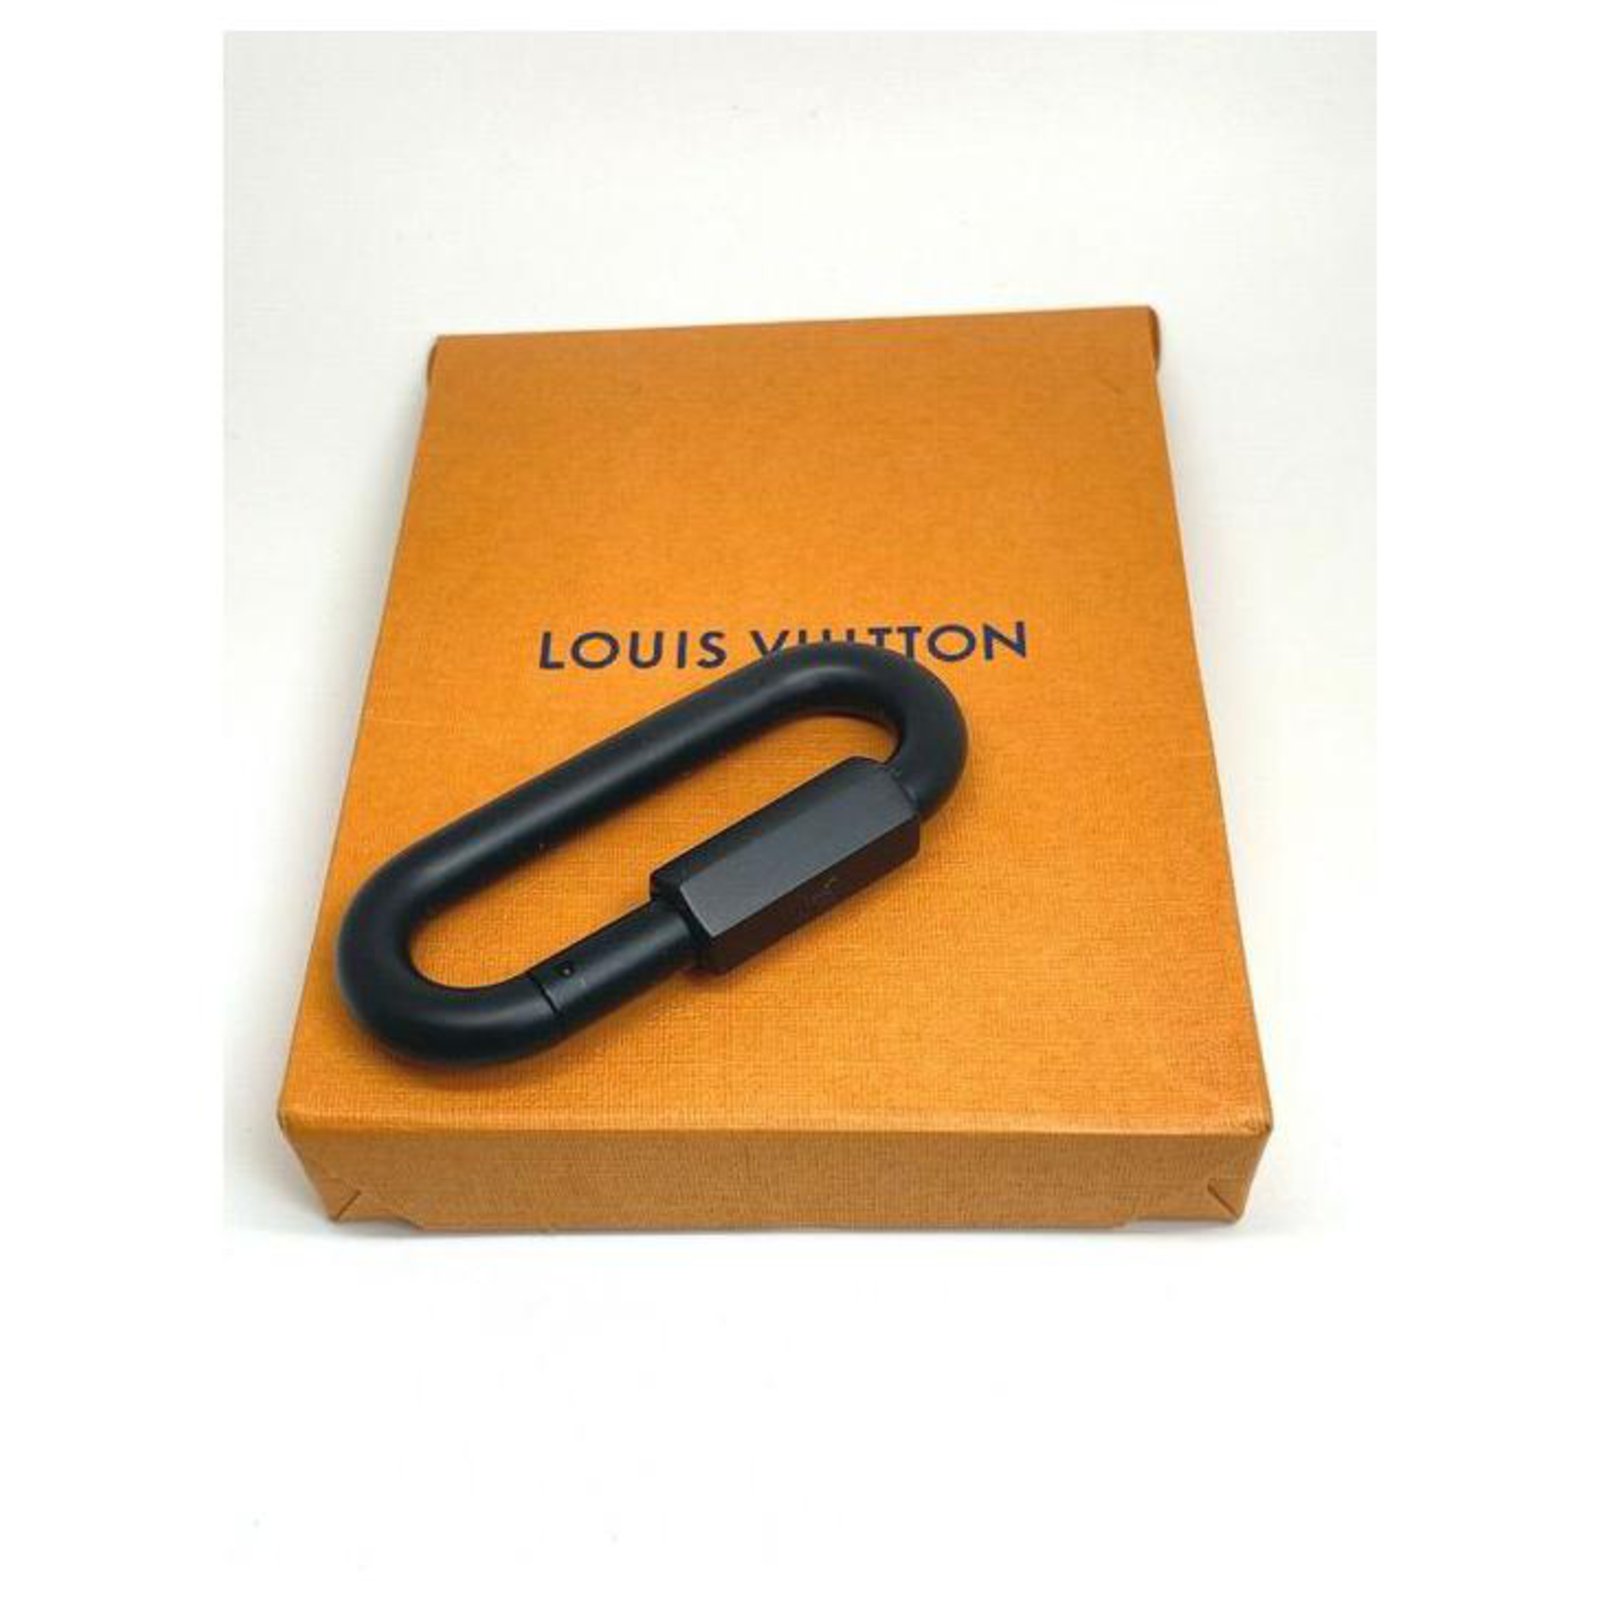 Louis Vuitton Snaps 